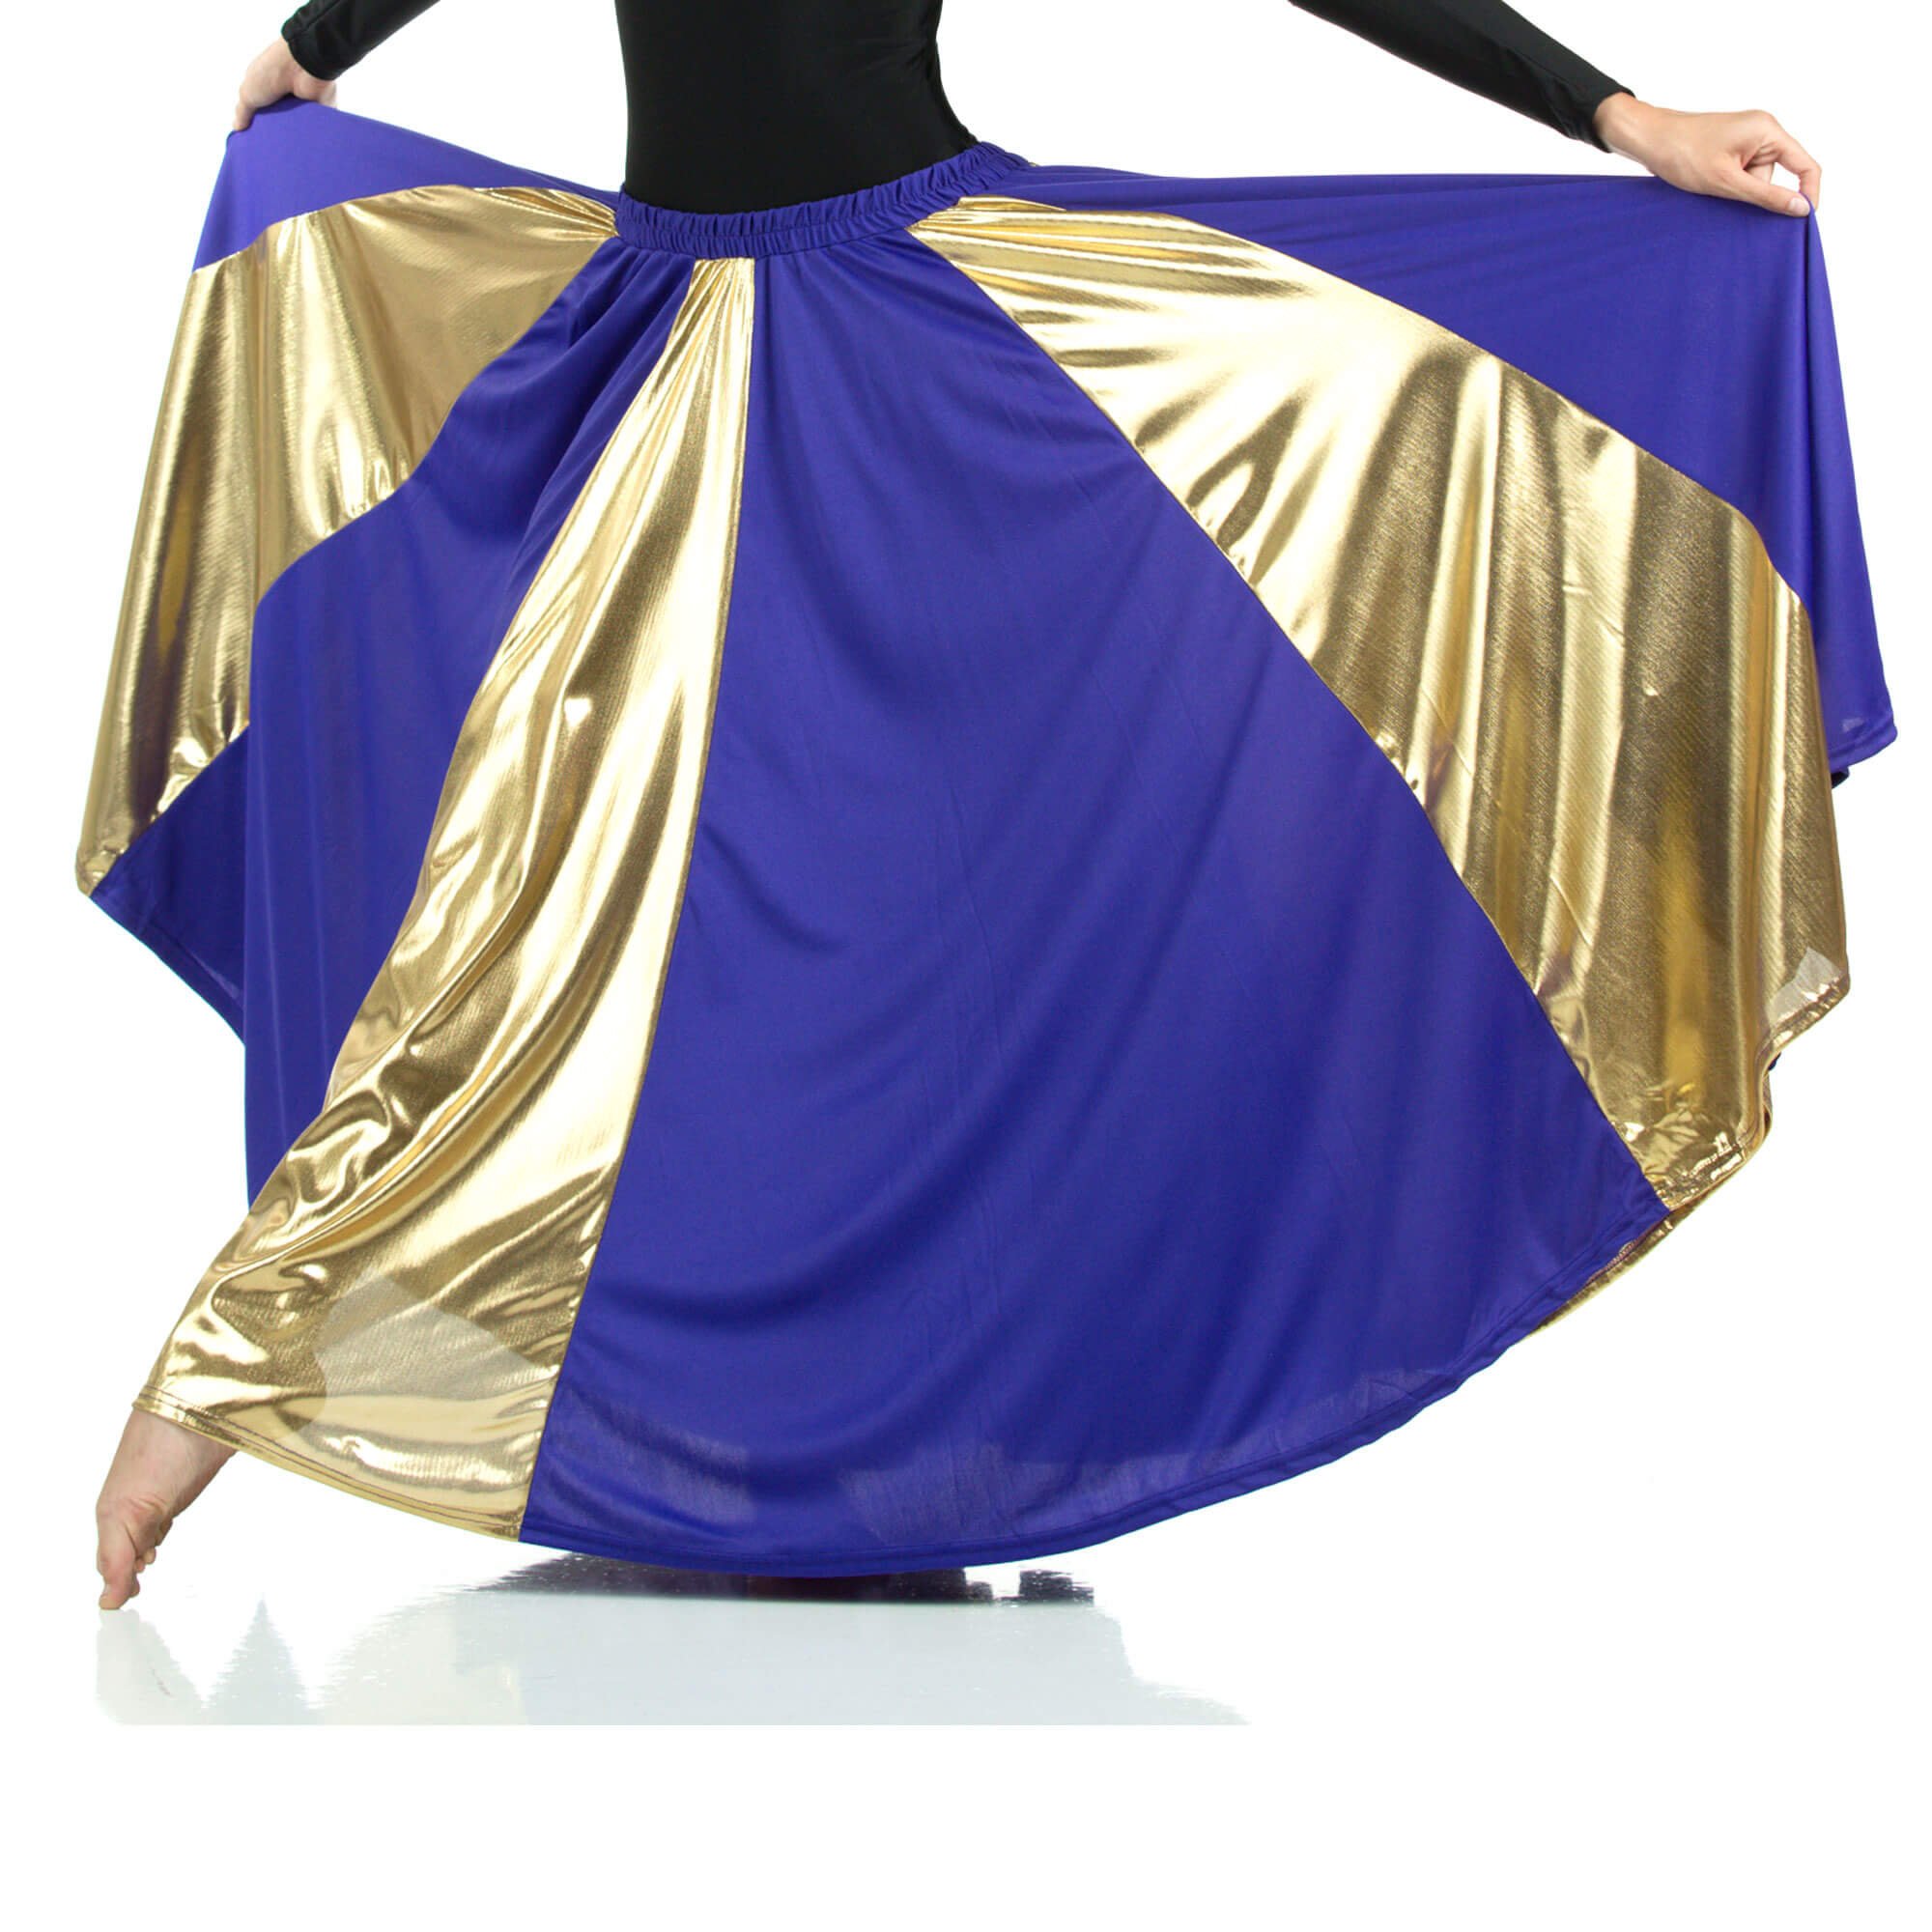 Danzcue Womens Long Full Elastic Chiffon Dance Skirt 